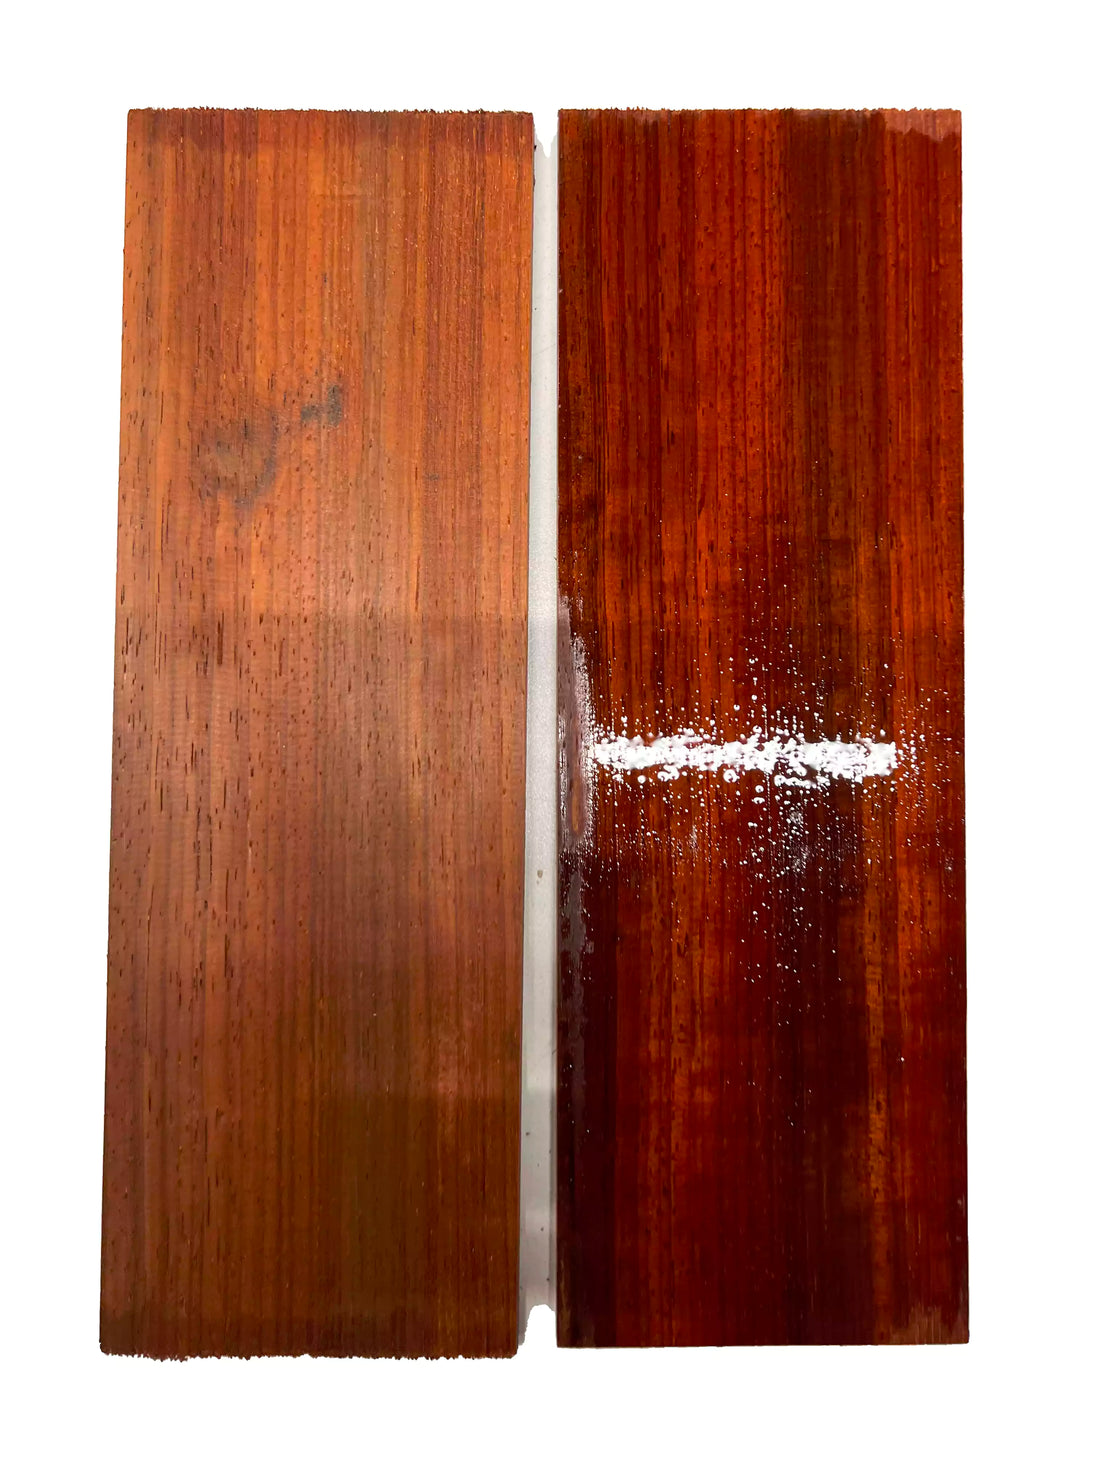 Pack of 2, Padauk Thin Stock Three Dimensional Lumber Board 12&quot; x 4&quot; x 1/4&quot; 